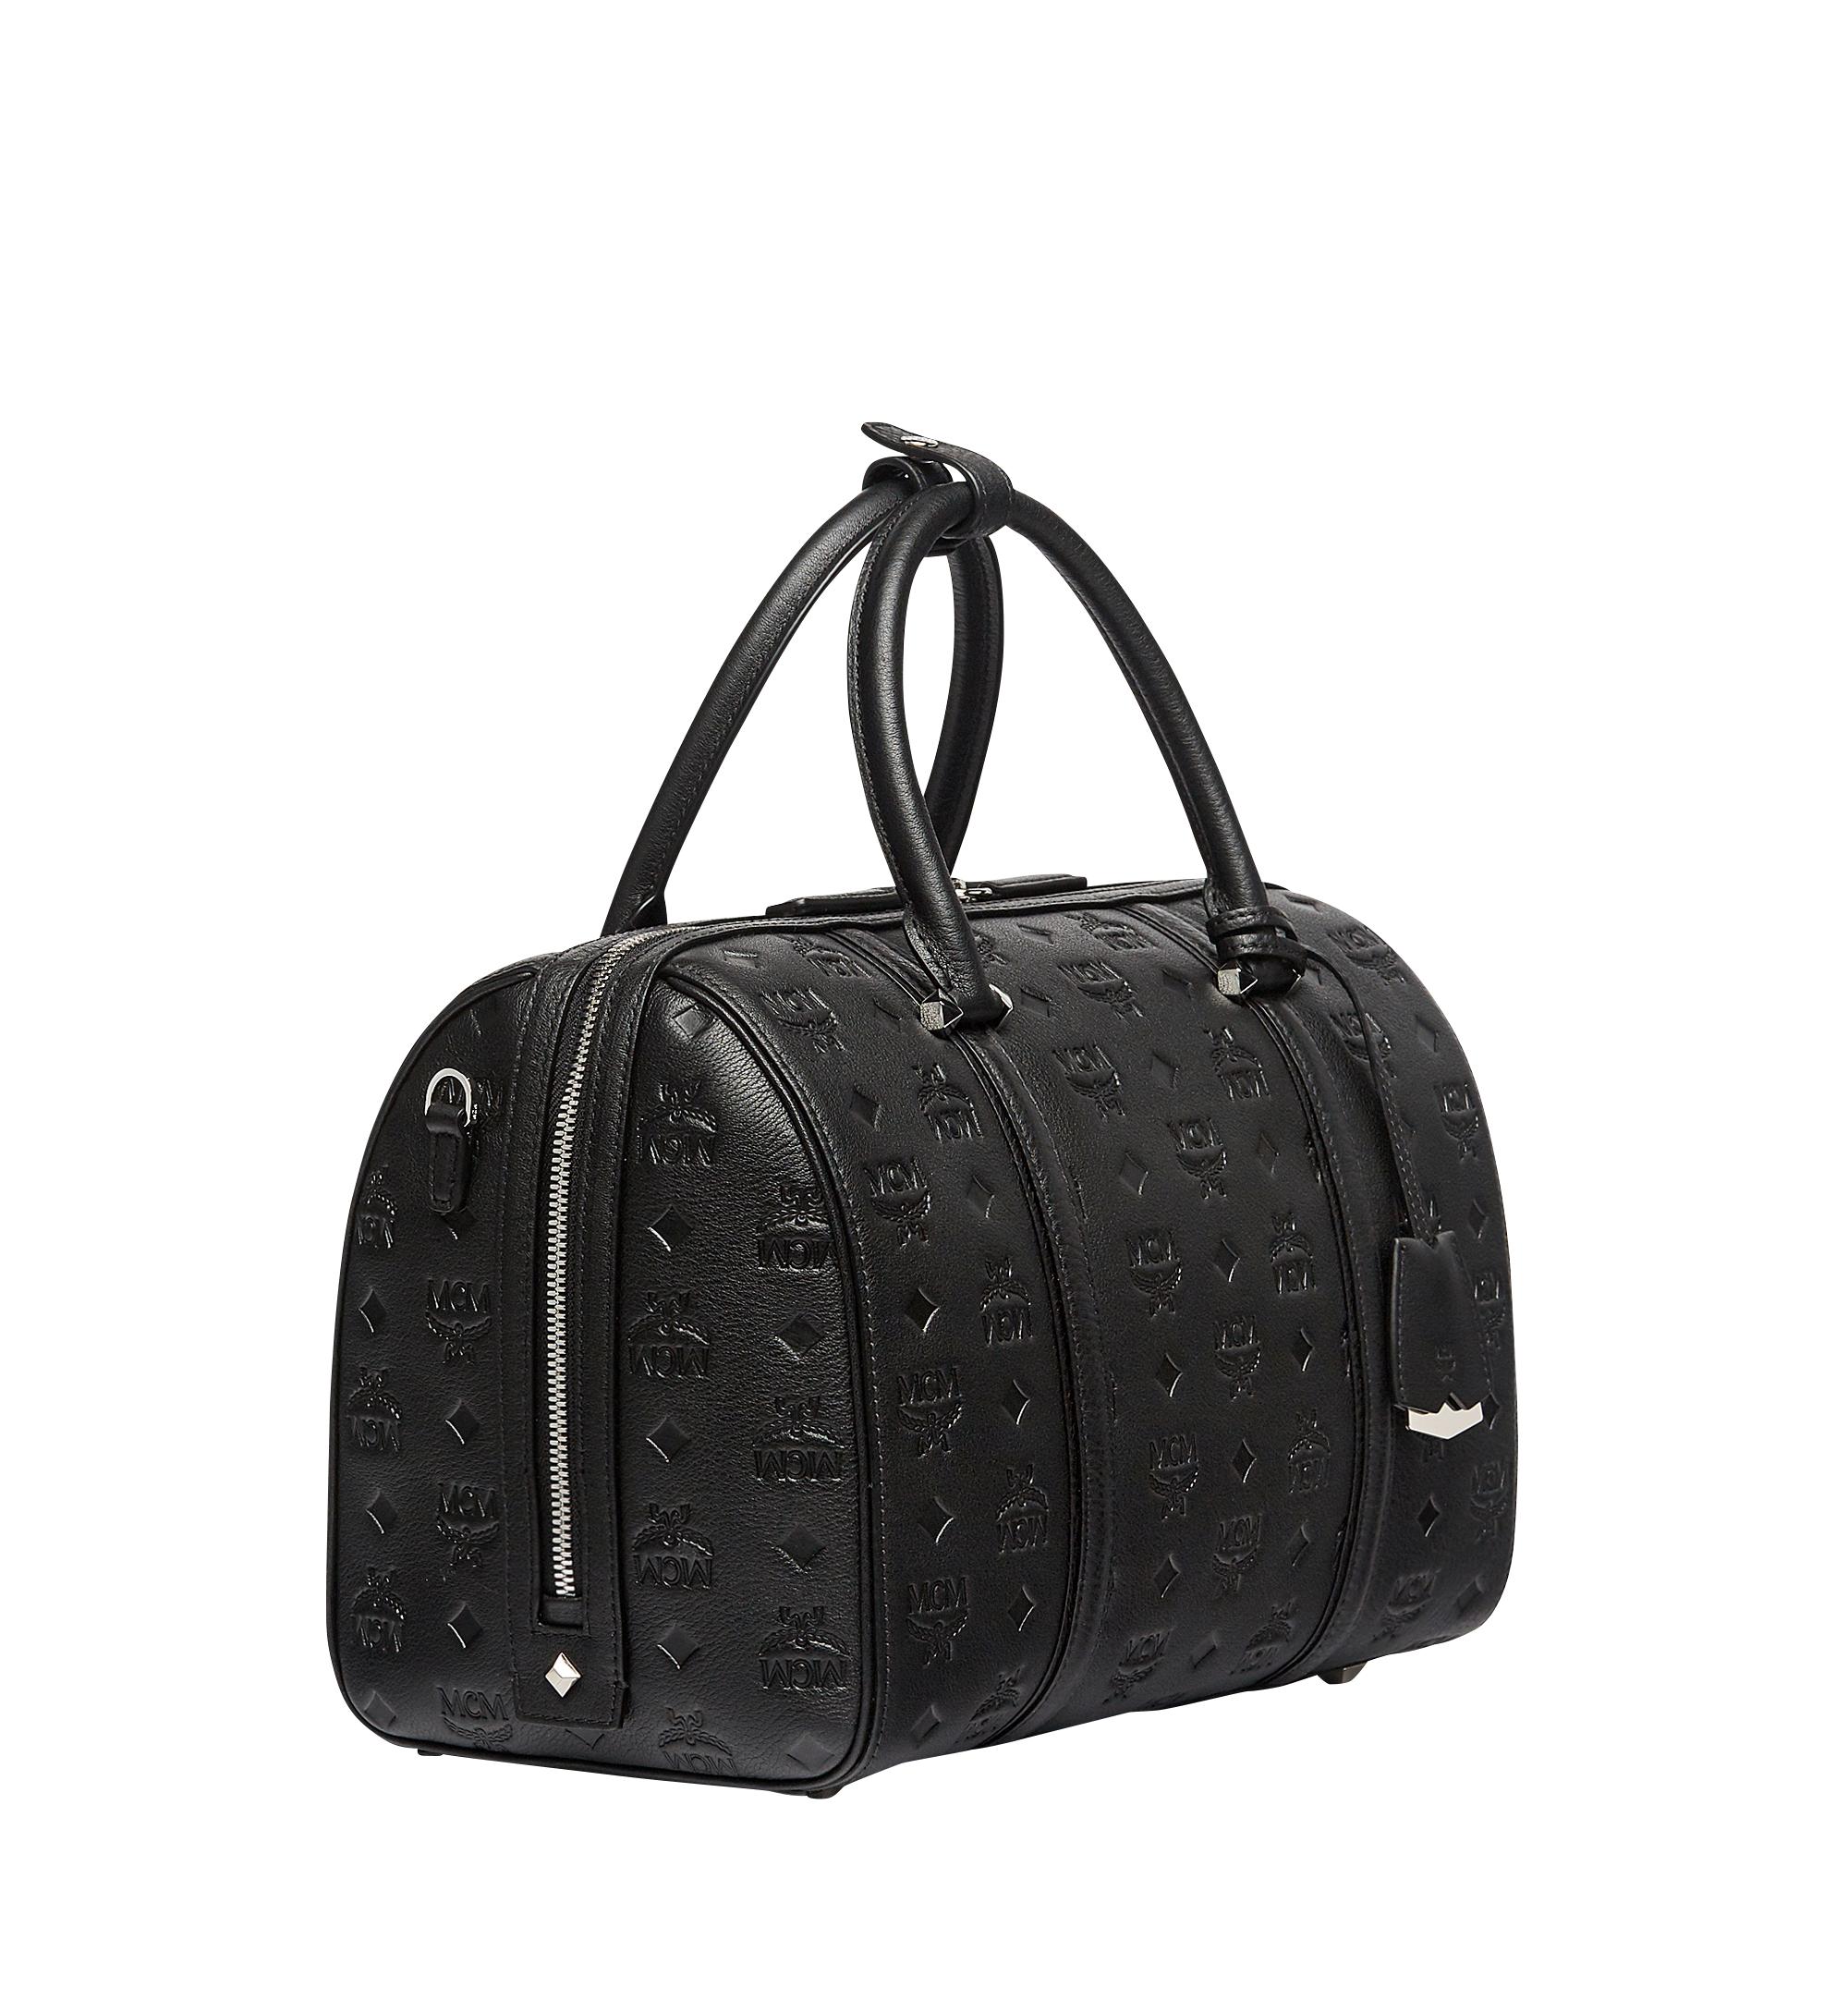 Boston leather mini bag MCM Black in Leather - 23764475